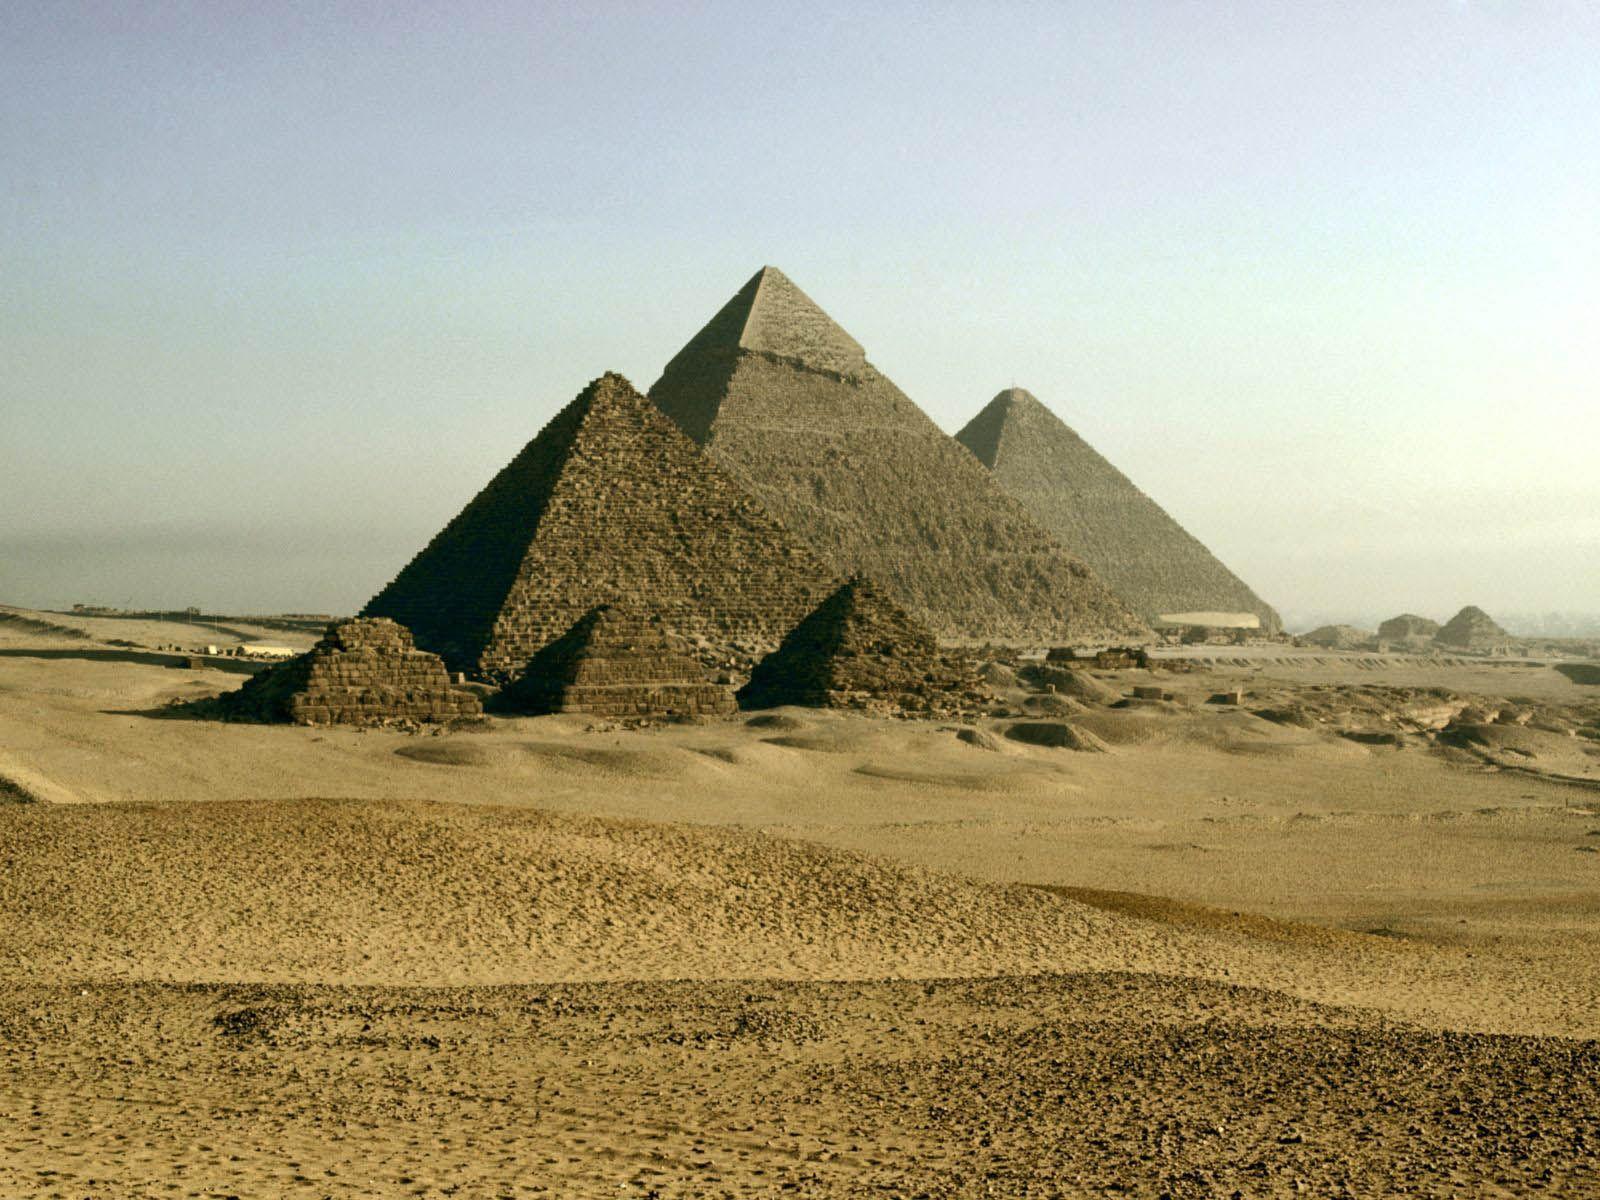 Tag: Egypt Pyramids Wallpaper, Background, Photo, Image